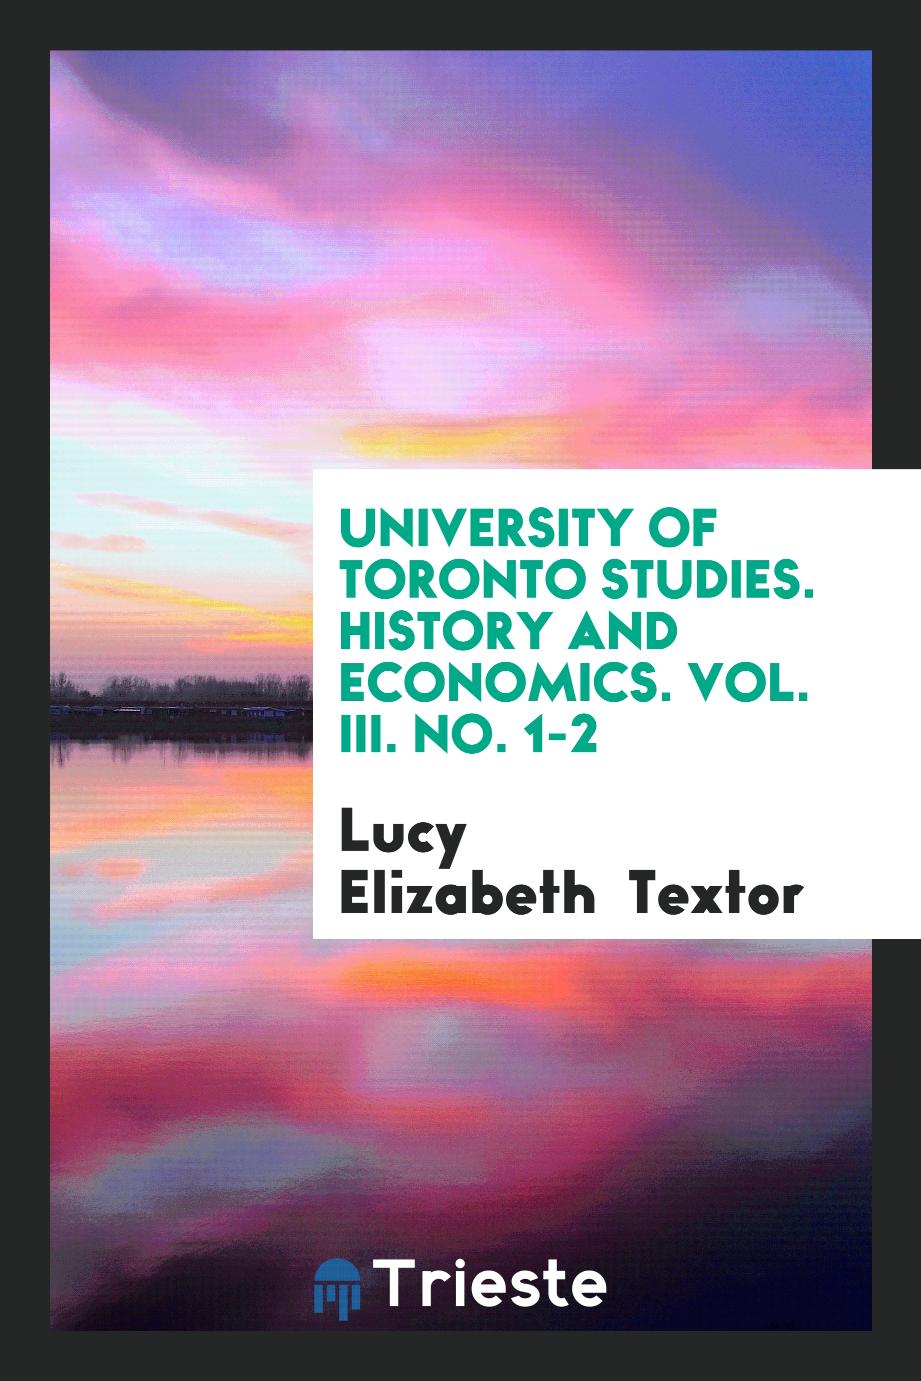 University of Toronto studies. History and economics. Vol. III. No. 1-2